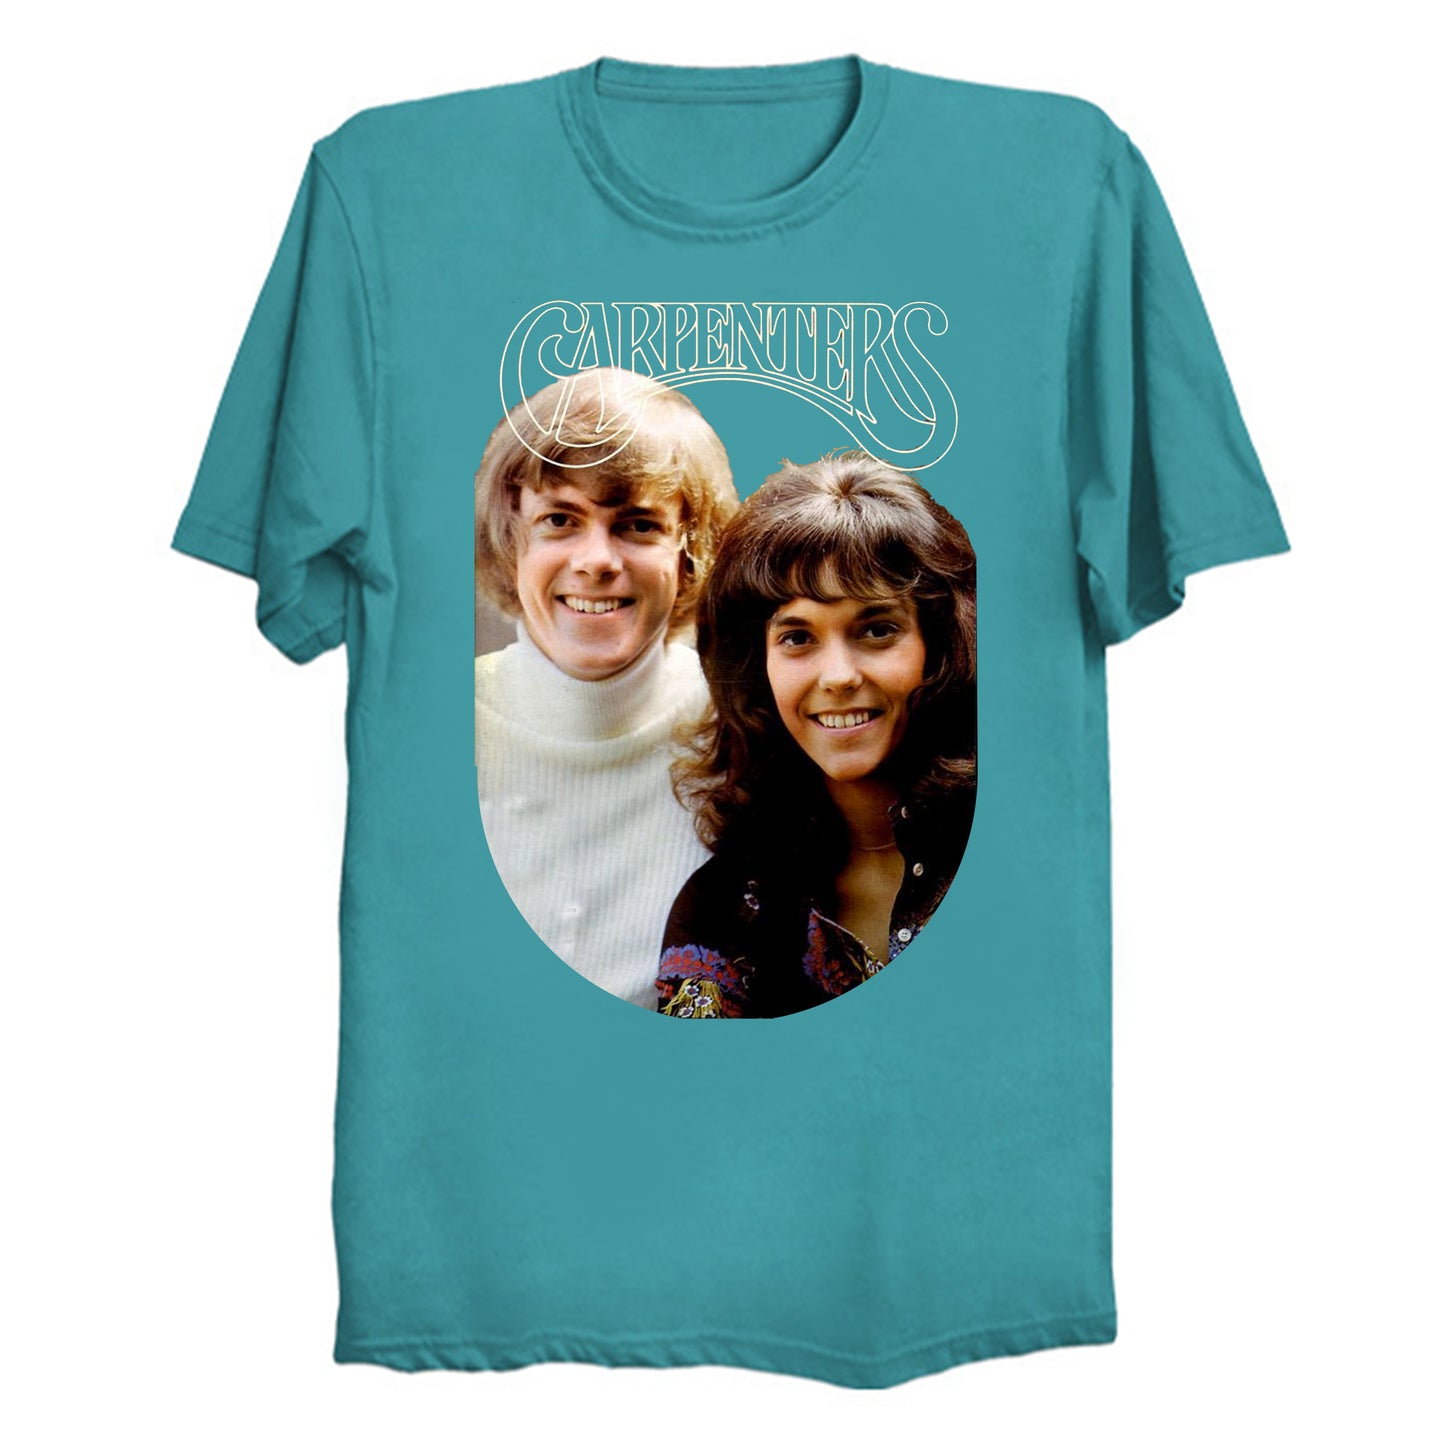 The Carpenters T-Shirt